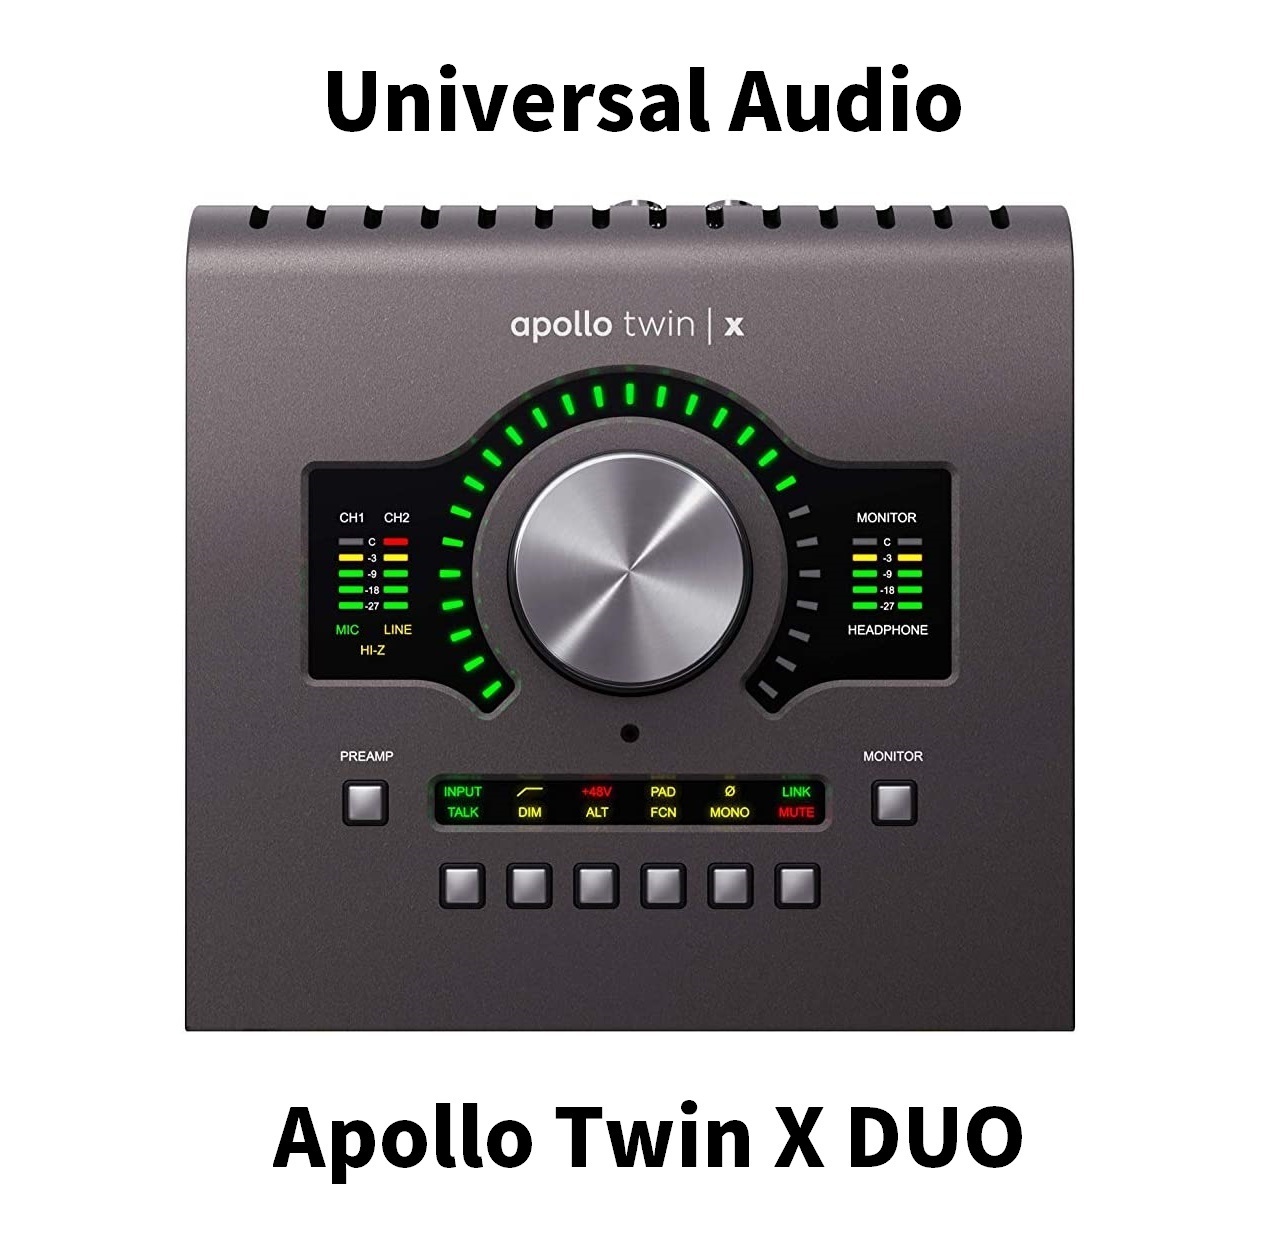 UNIVERSAL AUDIO apollo twin X DUO